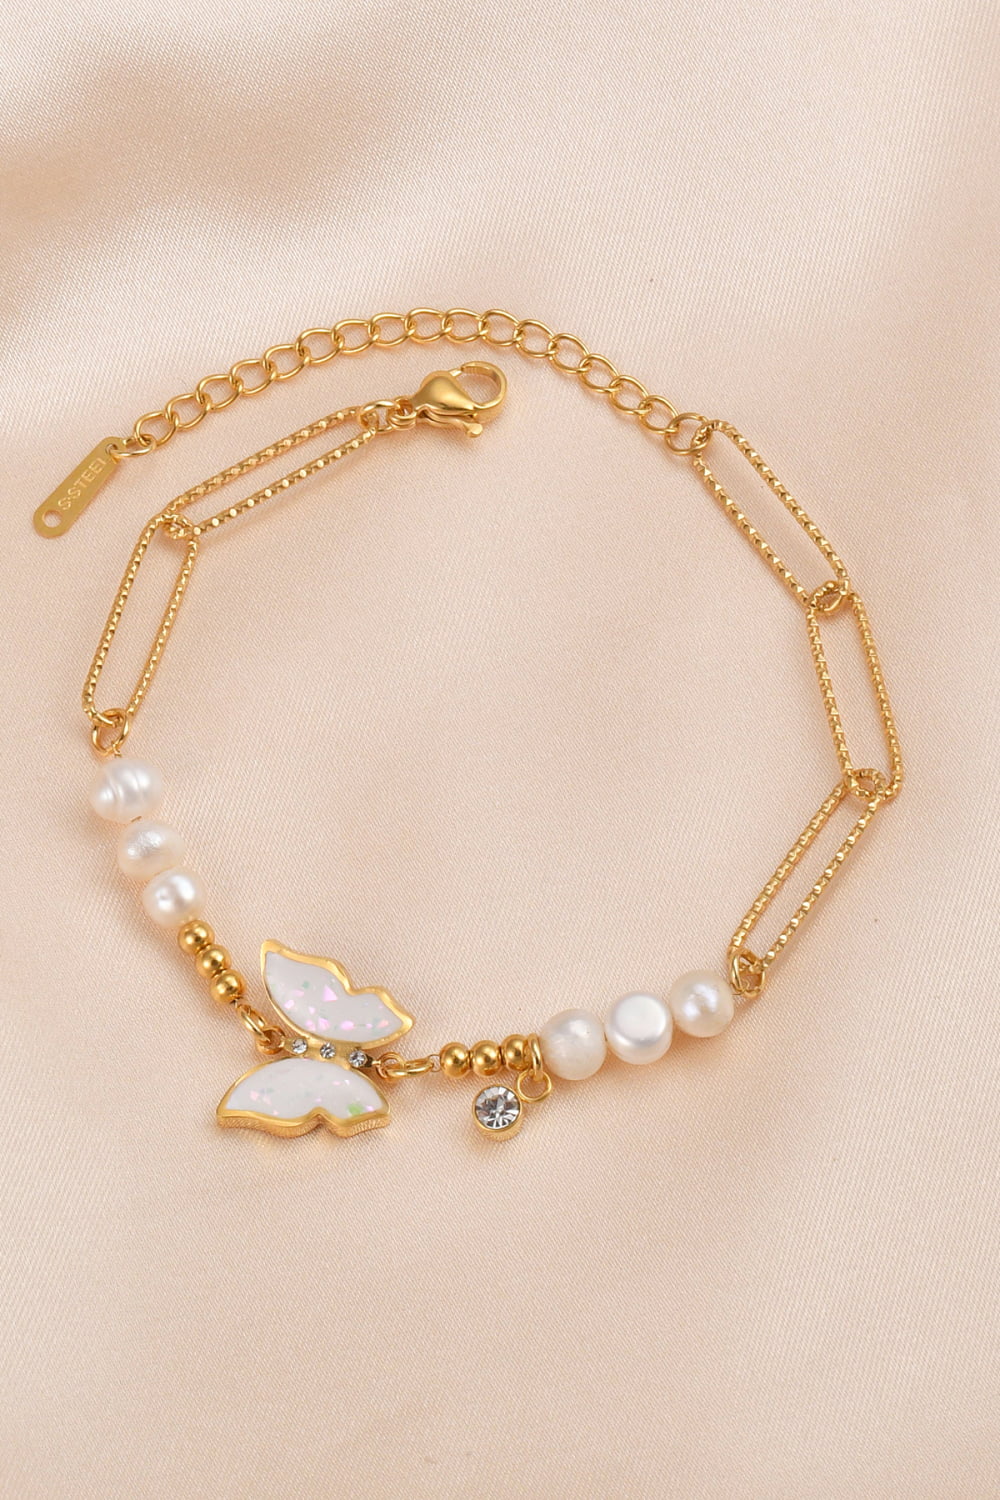 Butterfly Stainless Steel Bracelet - Gold / One Size - T-Shirts - Bracelets - 1 - 2024